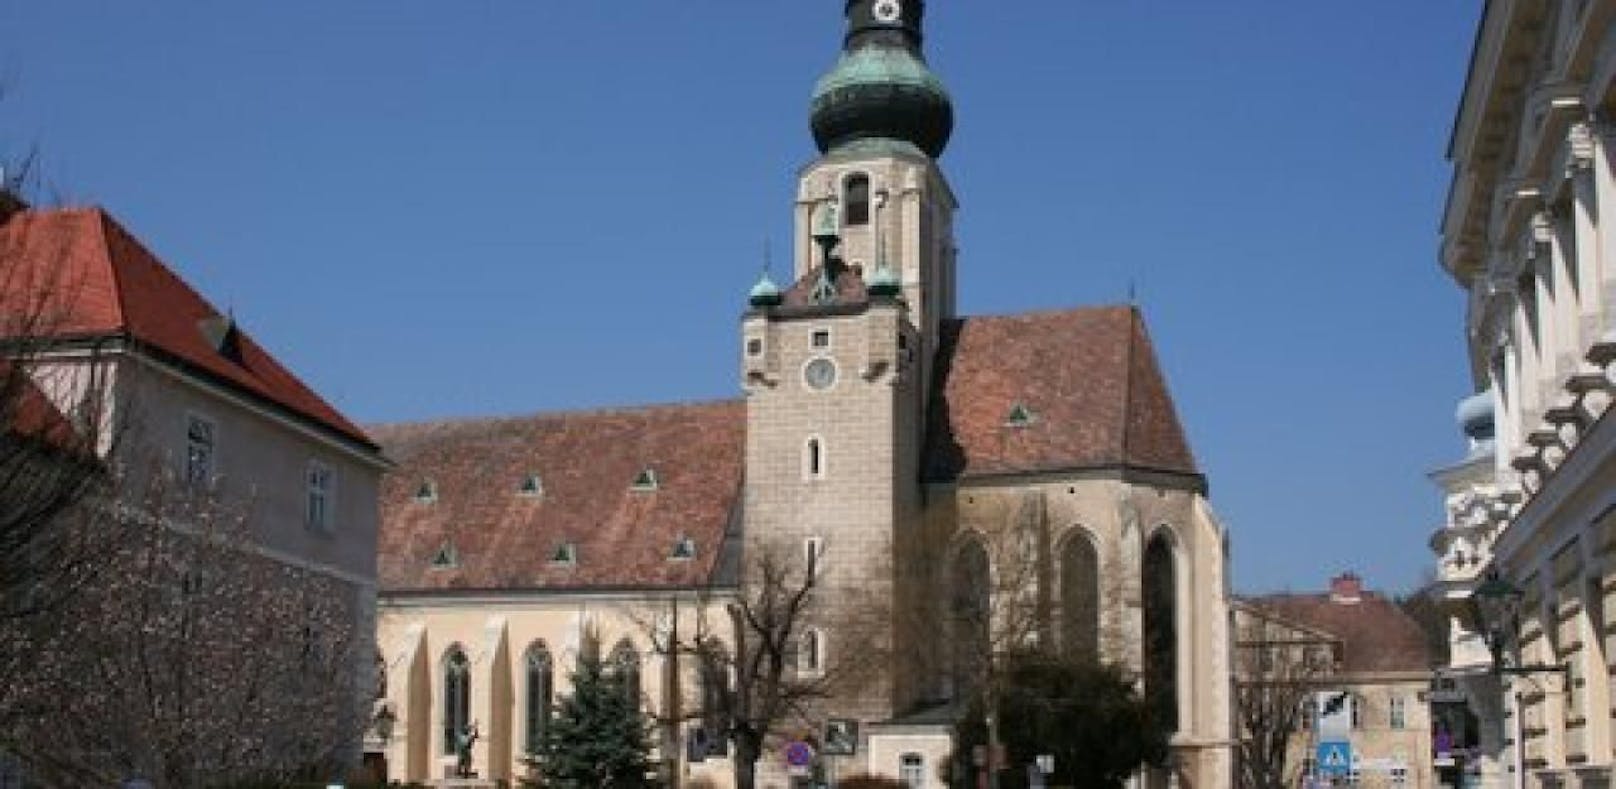 Die Stadtpfarrkirche St. Stephan in Baden.